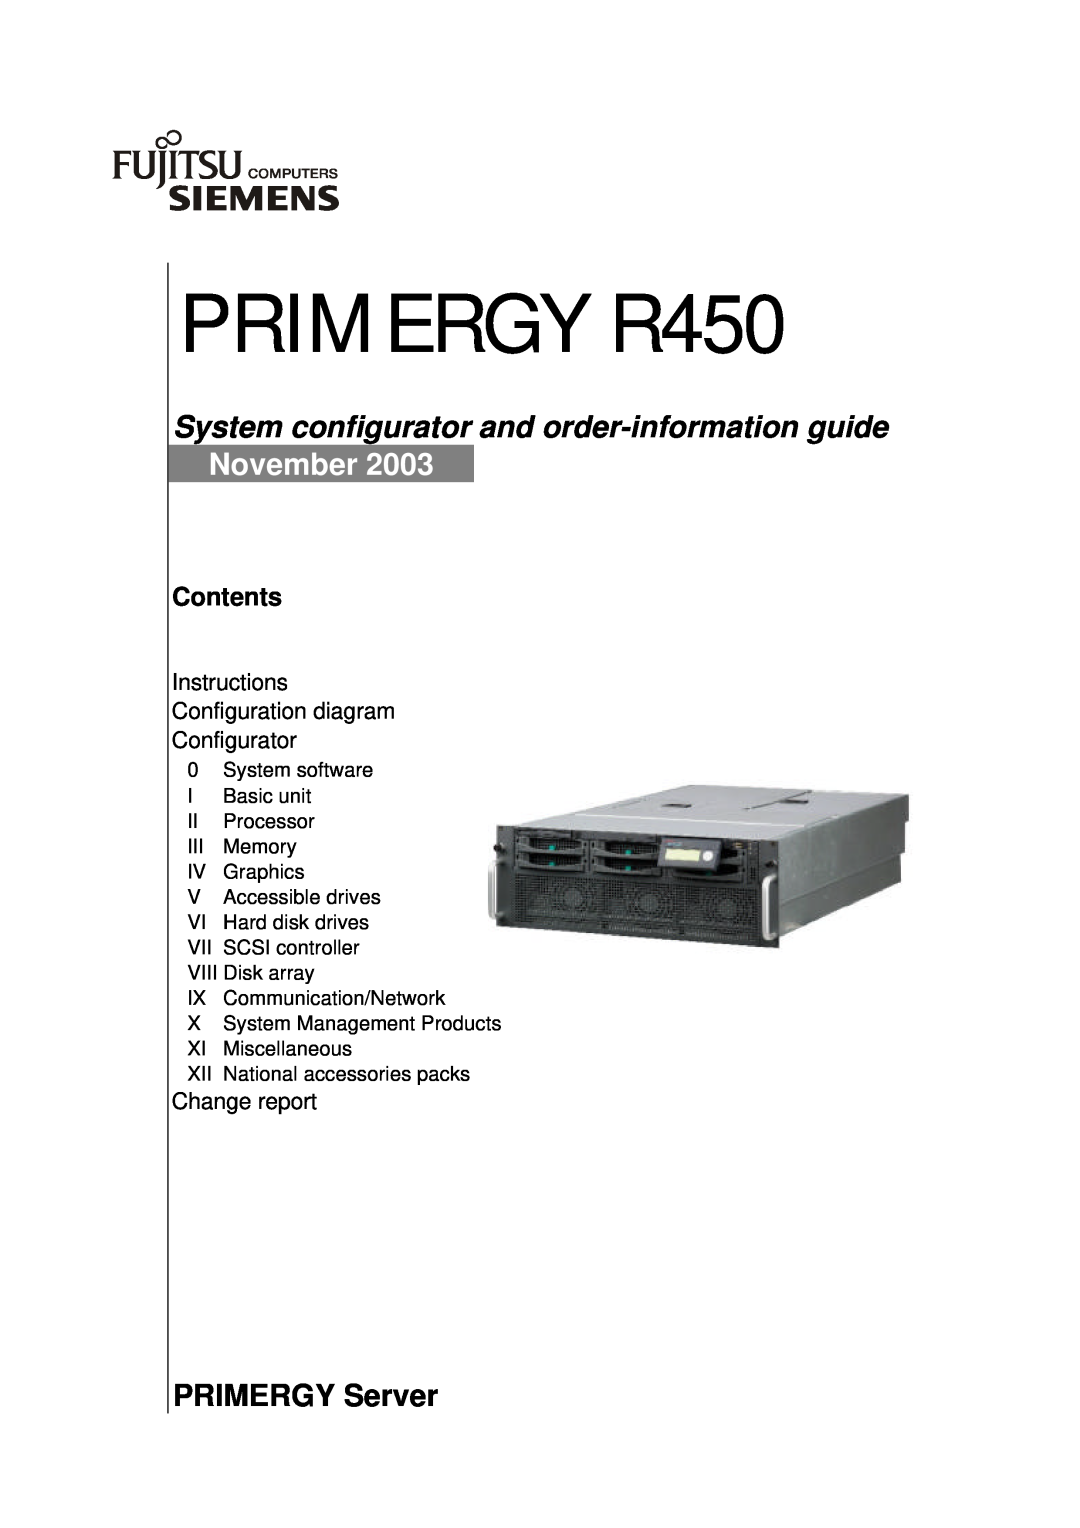 Fujitsu manual PRIMERGY R450, System configurator and order-information guide November, PRIMERGY Server, Contents 